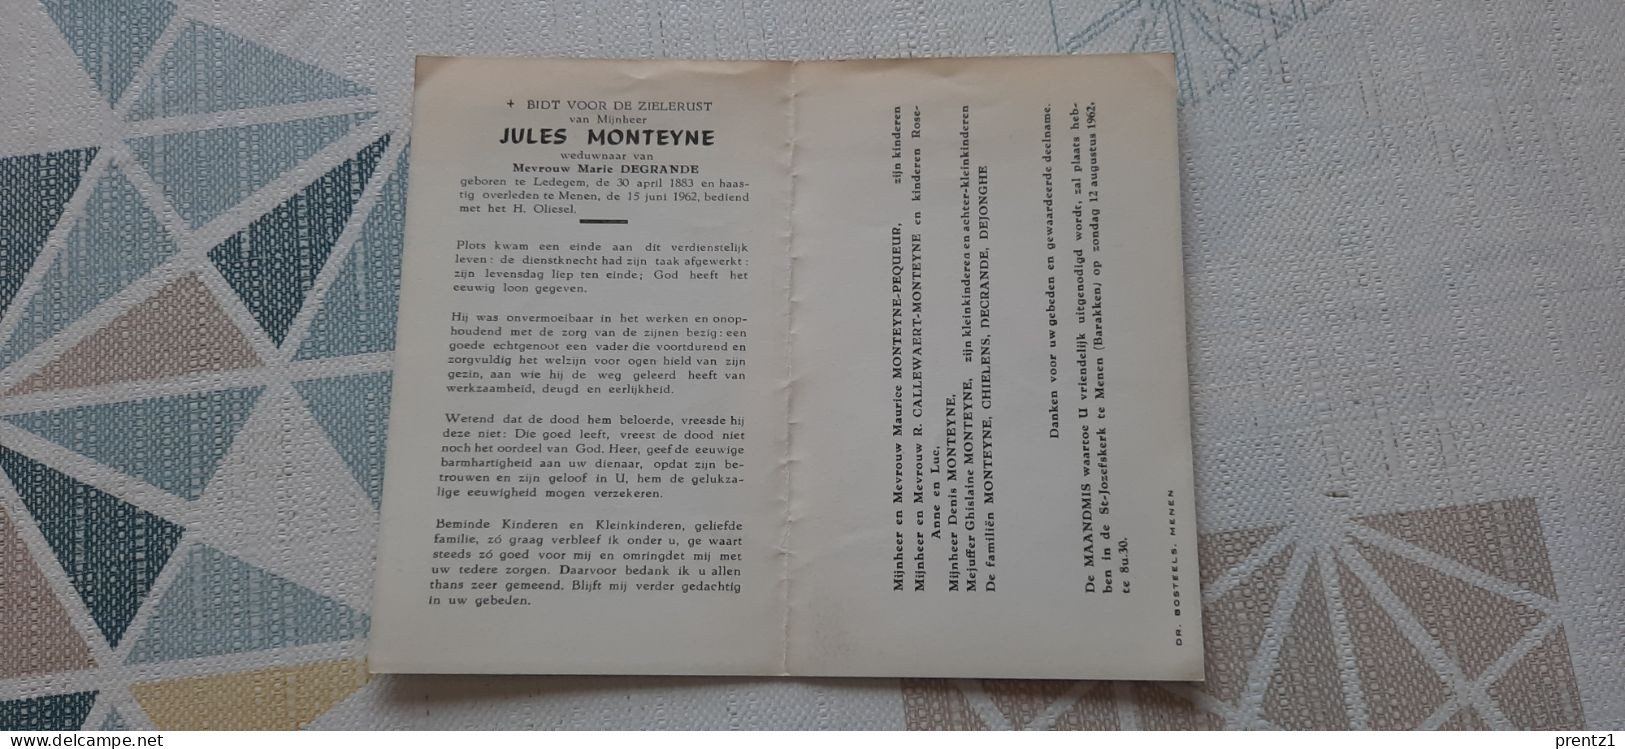 Jules Monteyne Geb. Ledegem 30/04/1883- Getr. M. Degrande - Gest. Menen 15/06/1962 - Devotion Images